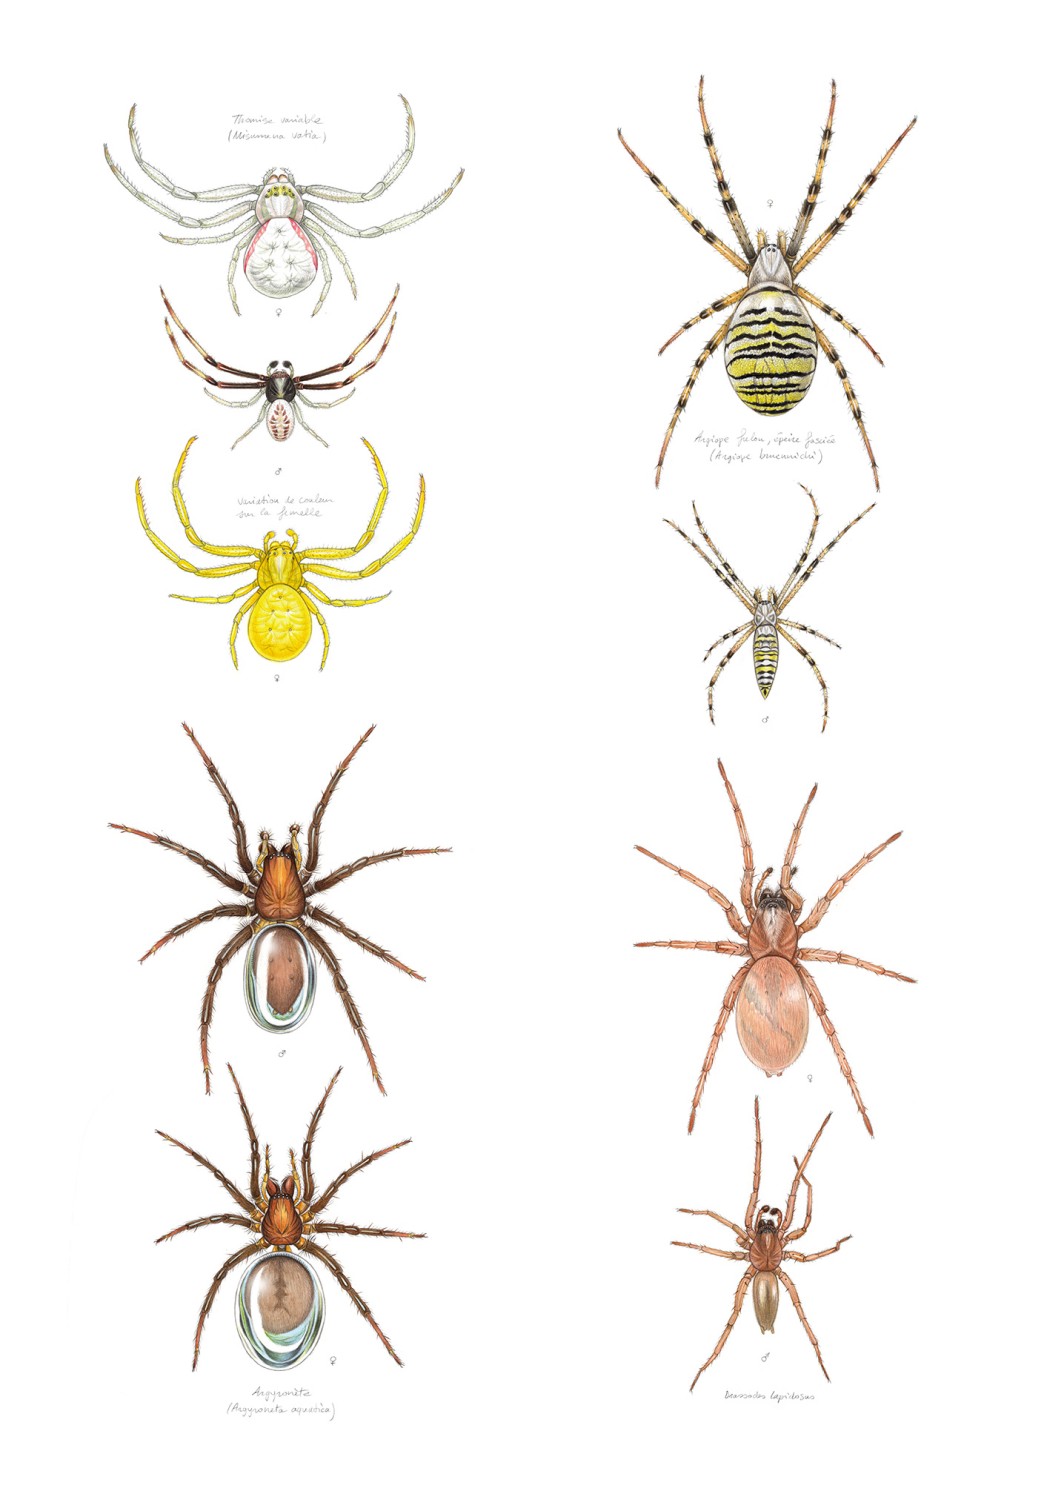 Marcello-art : Entomologie 459 - 4 araignées mâles et femelles